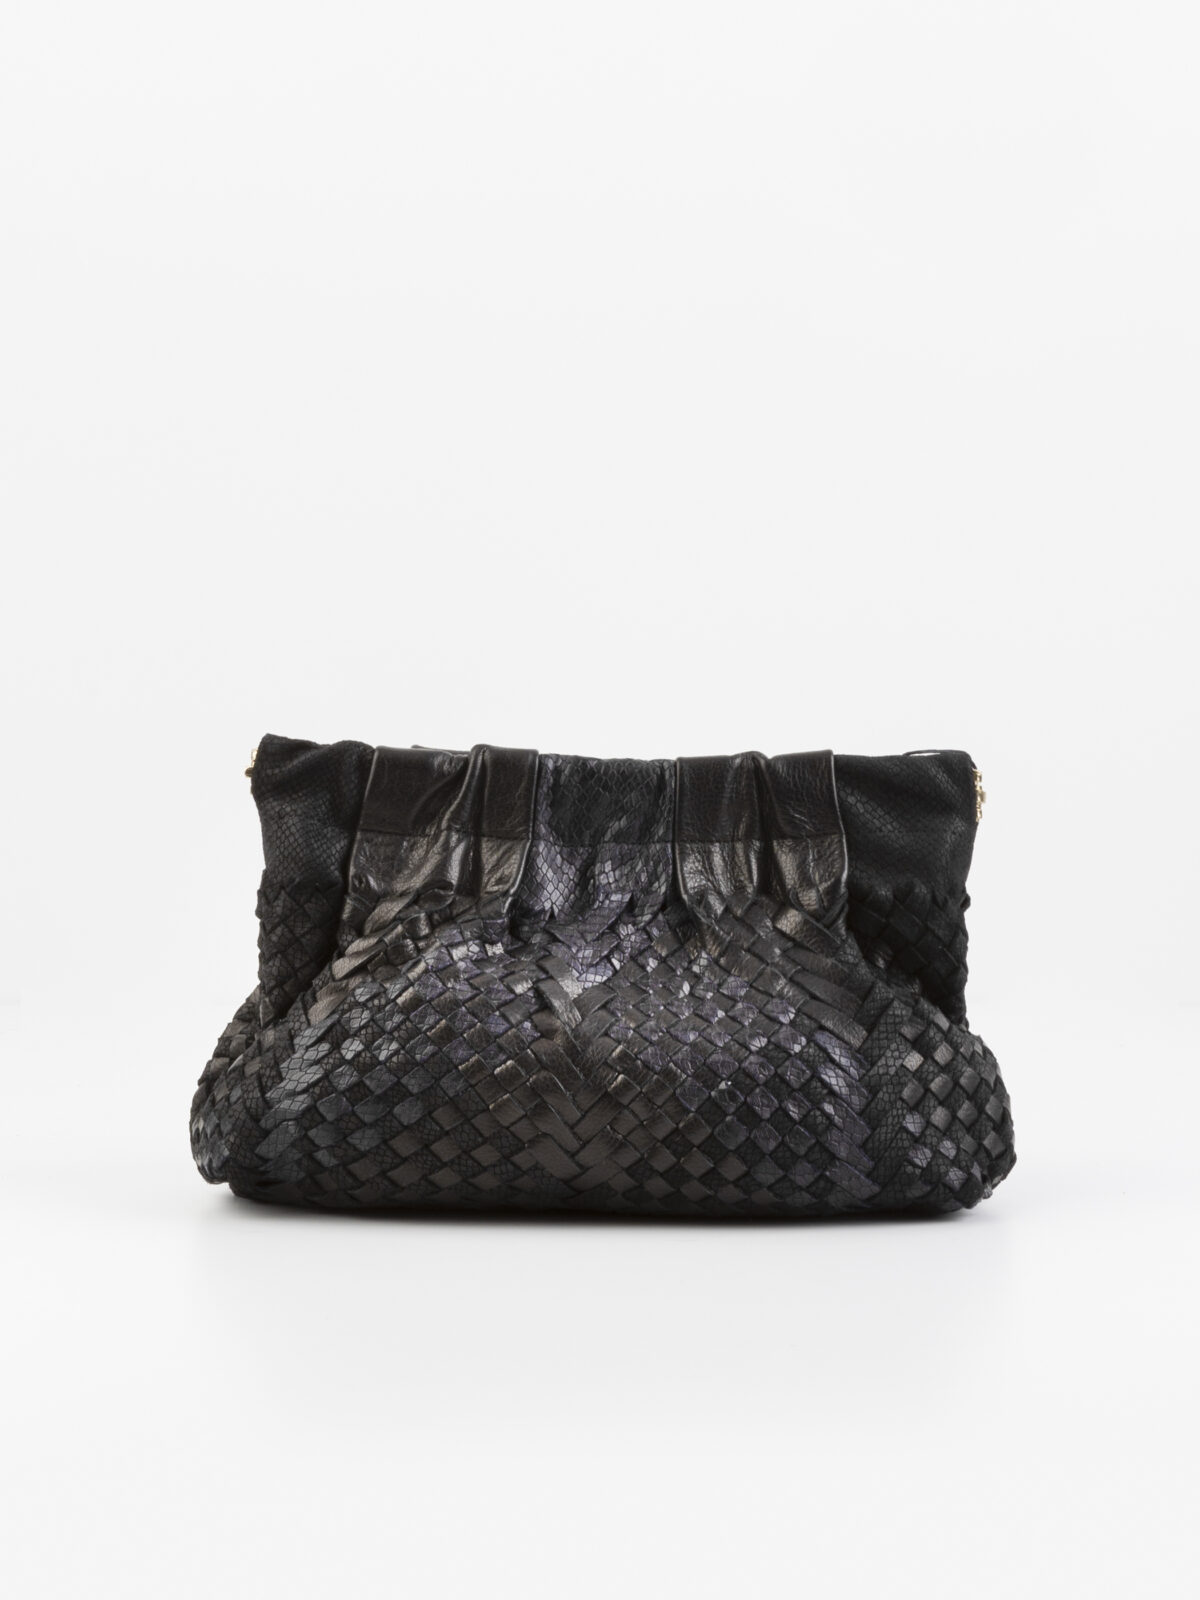 baby-lissa-leather-clutch-bag-weaved-handmade-claramonte-matchboxathens